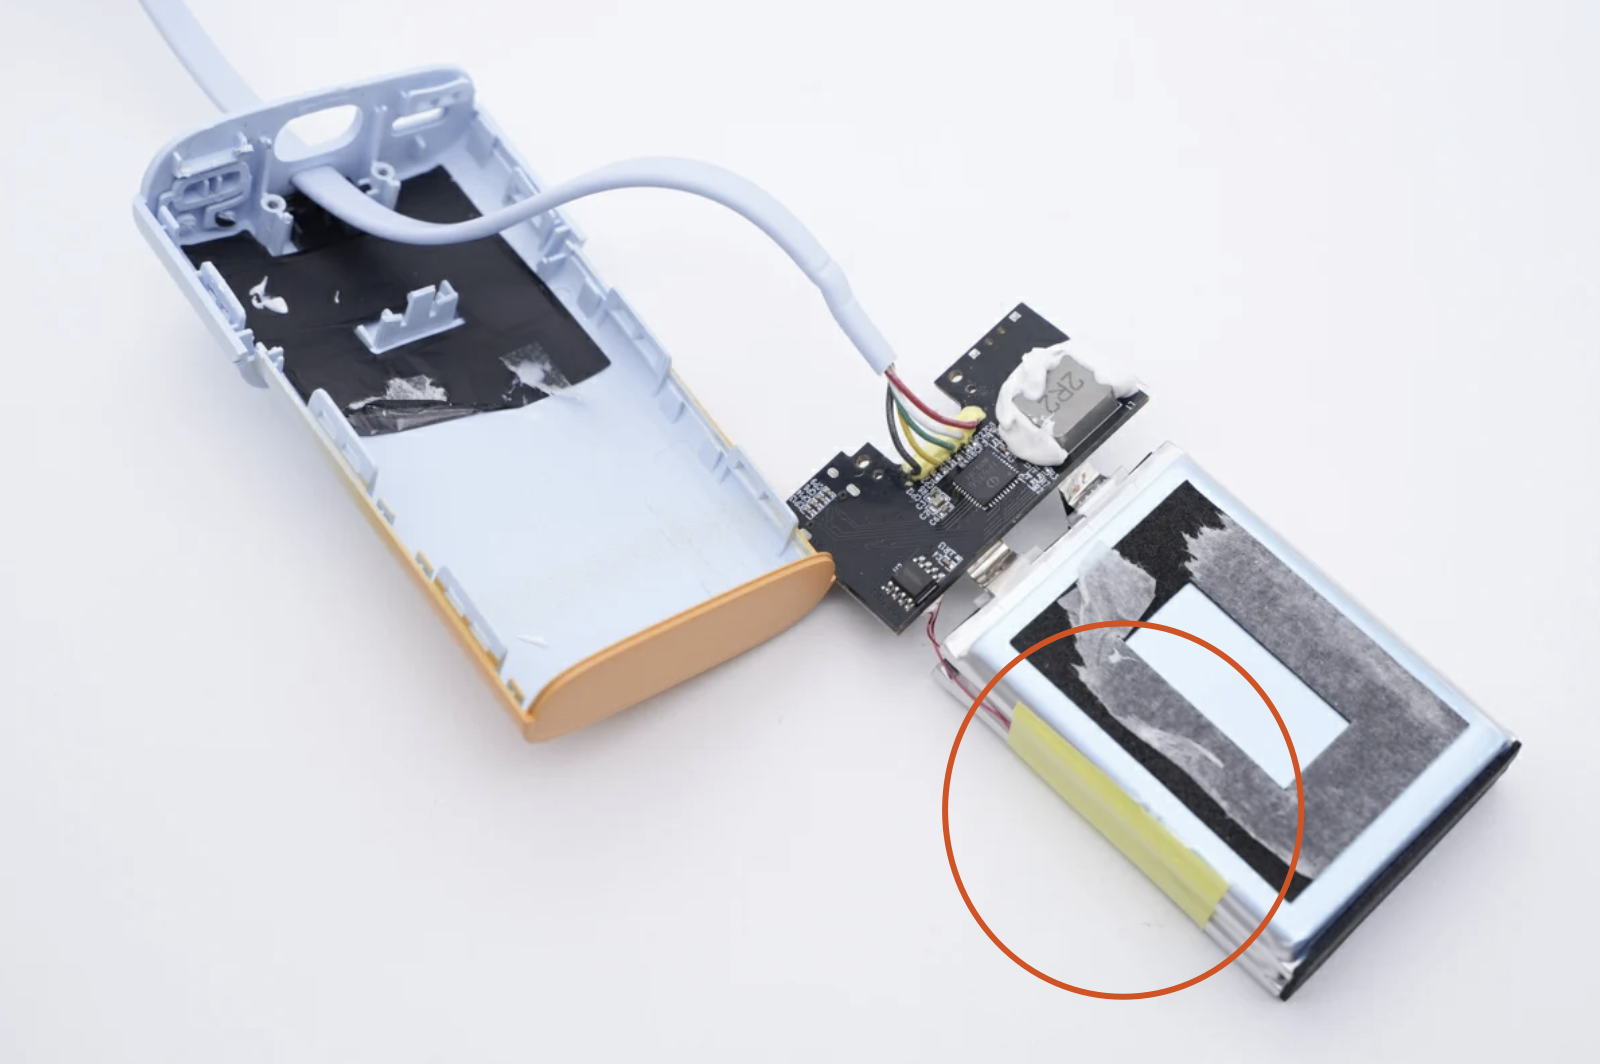 Teardown of Baseus 20W Popsicle USB-C Power Bank (PPKDC05I)-Chargerlab